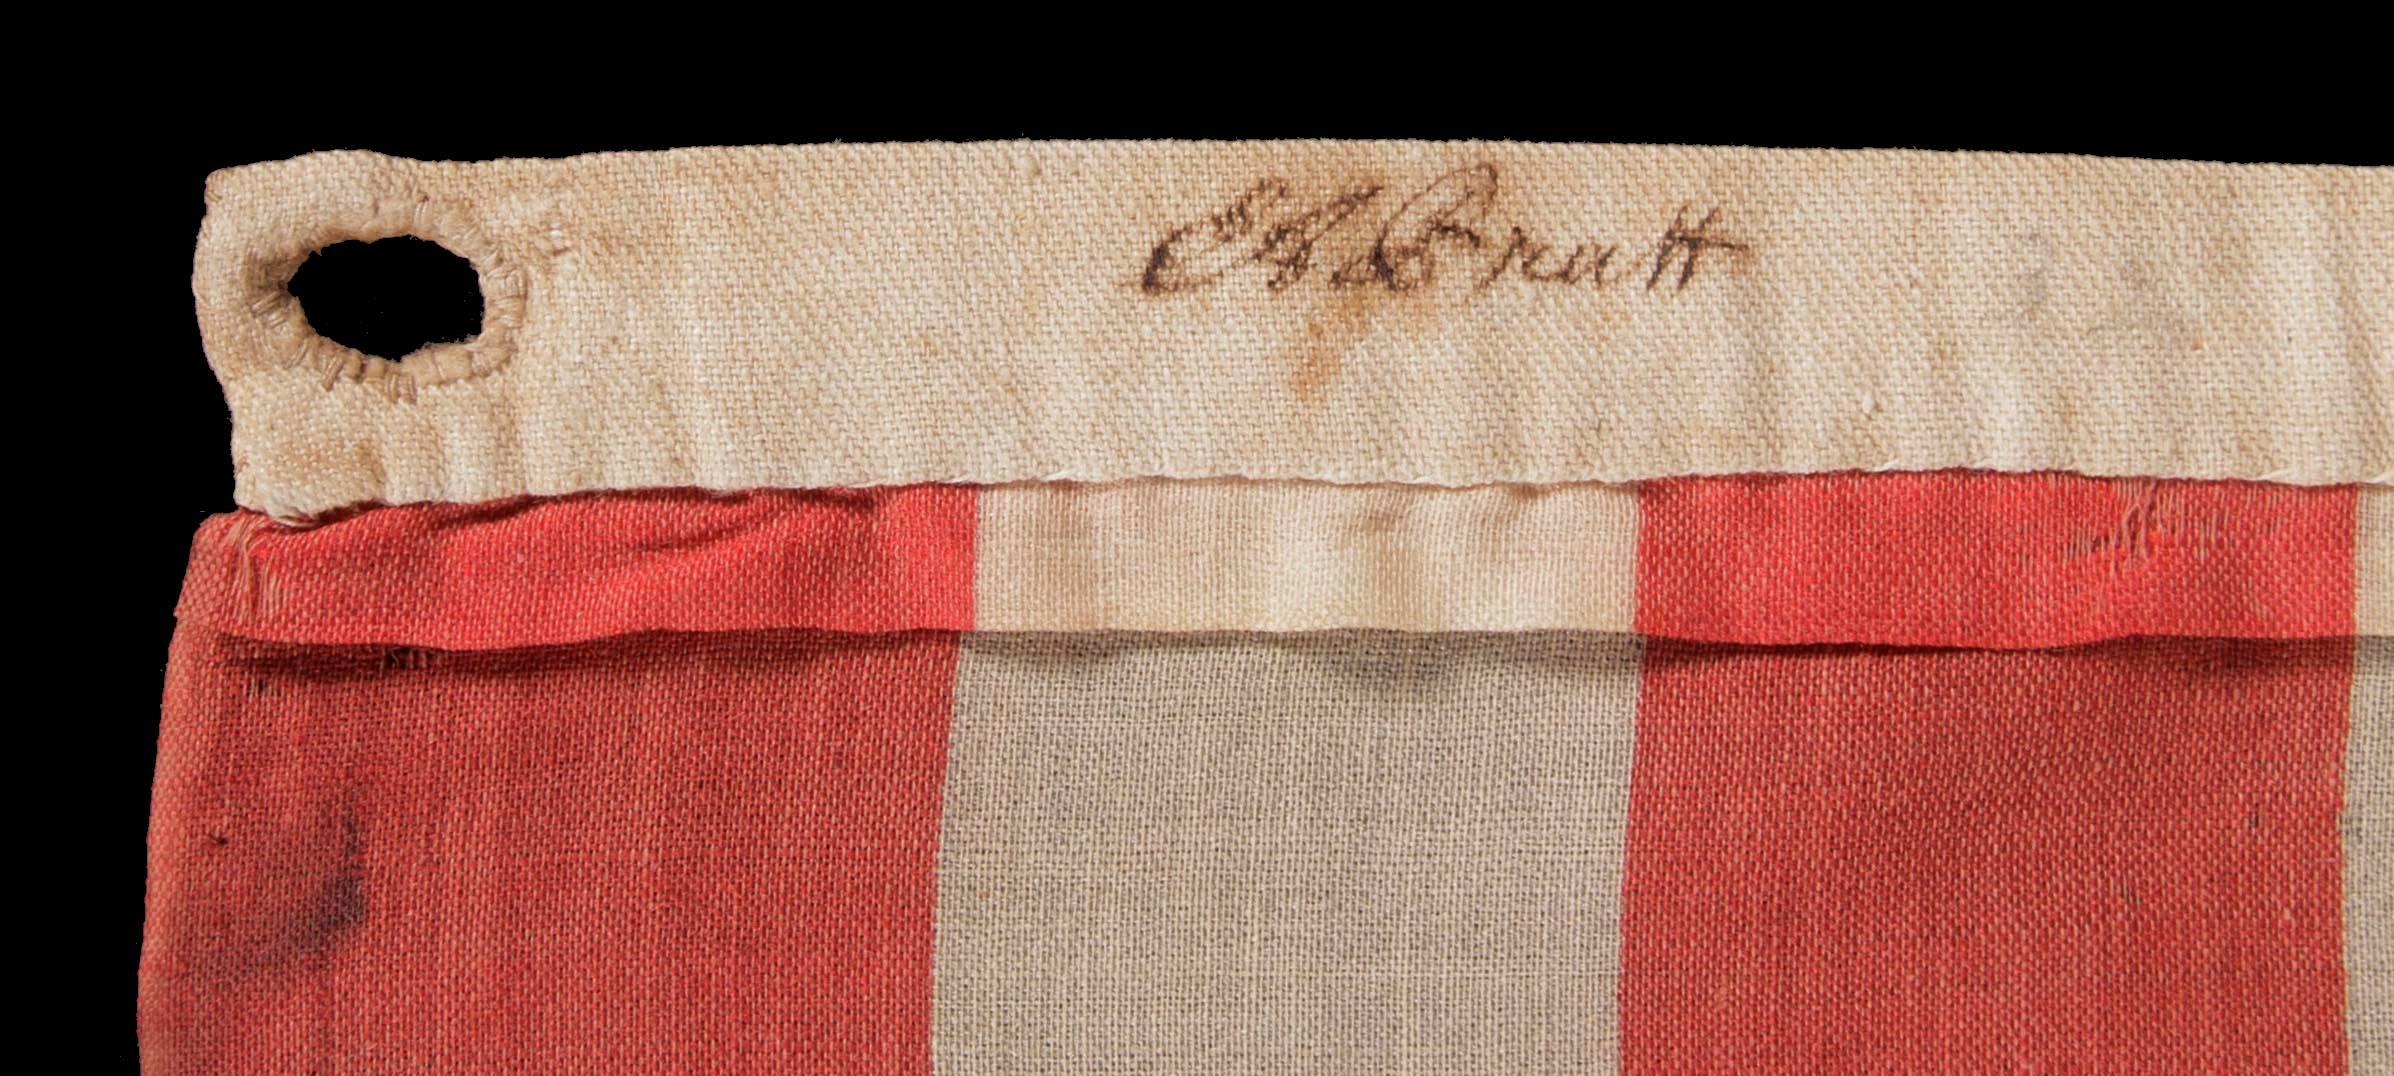 Mid-19th Century 32 Star Antique American Flag, Representing Minnesota Statehood